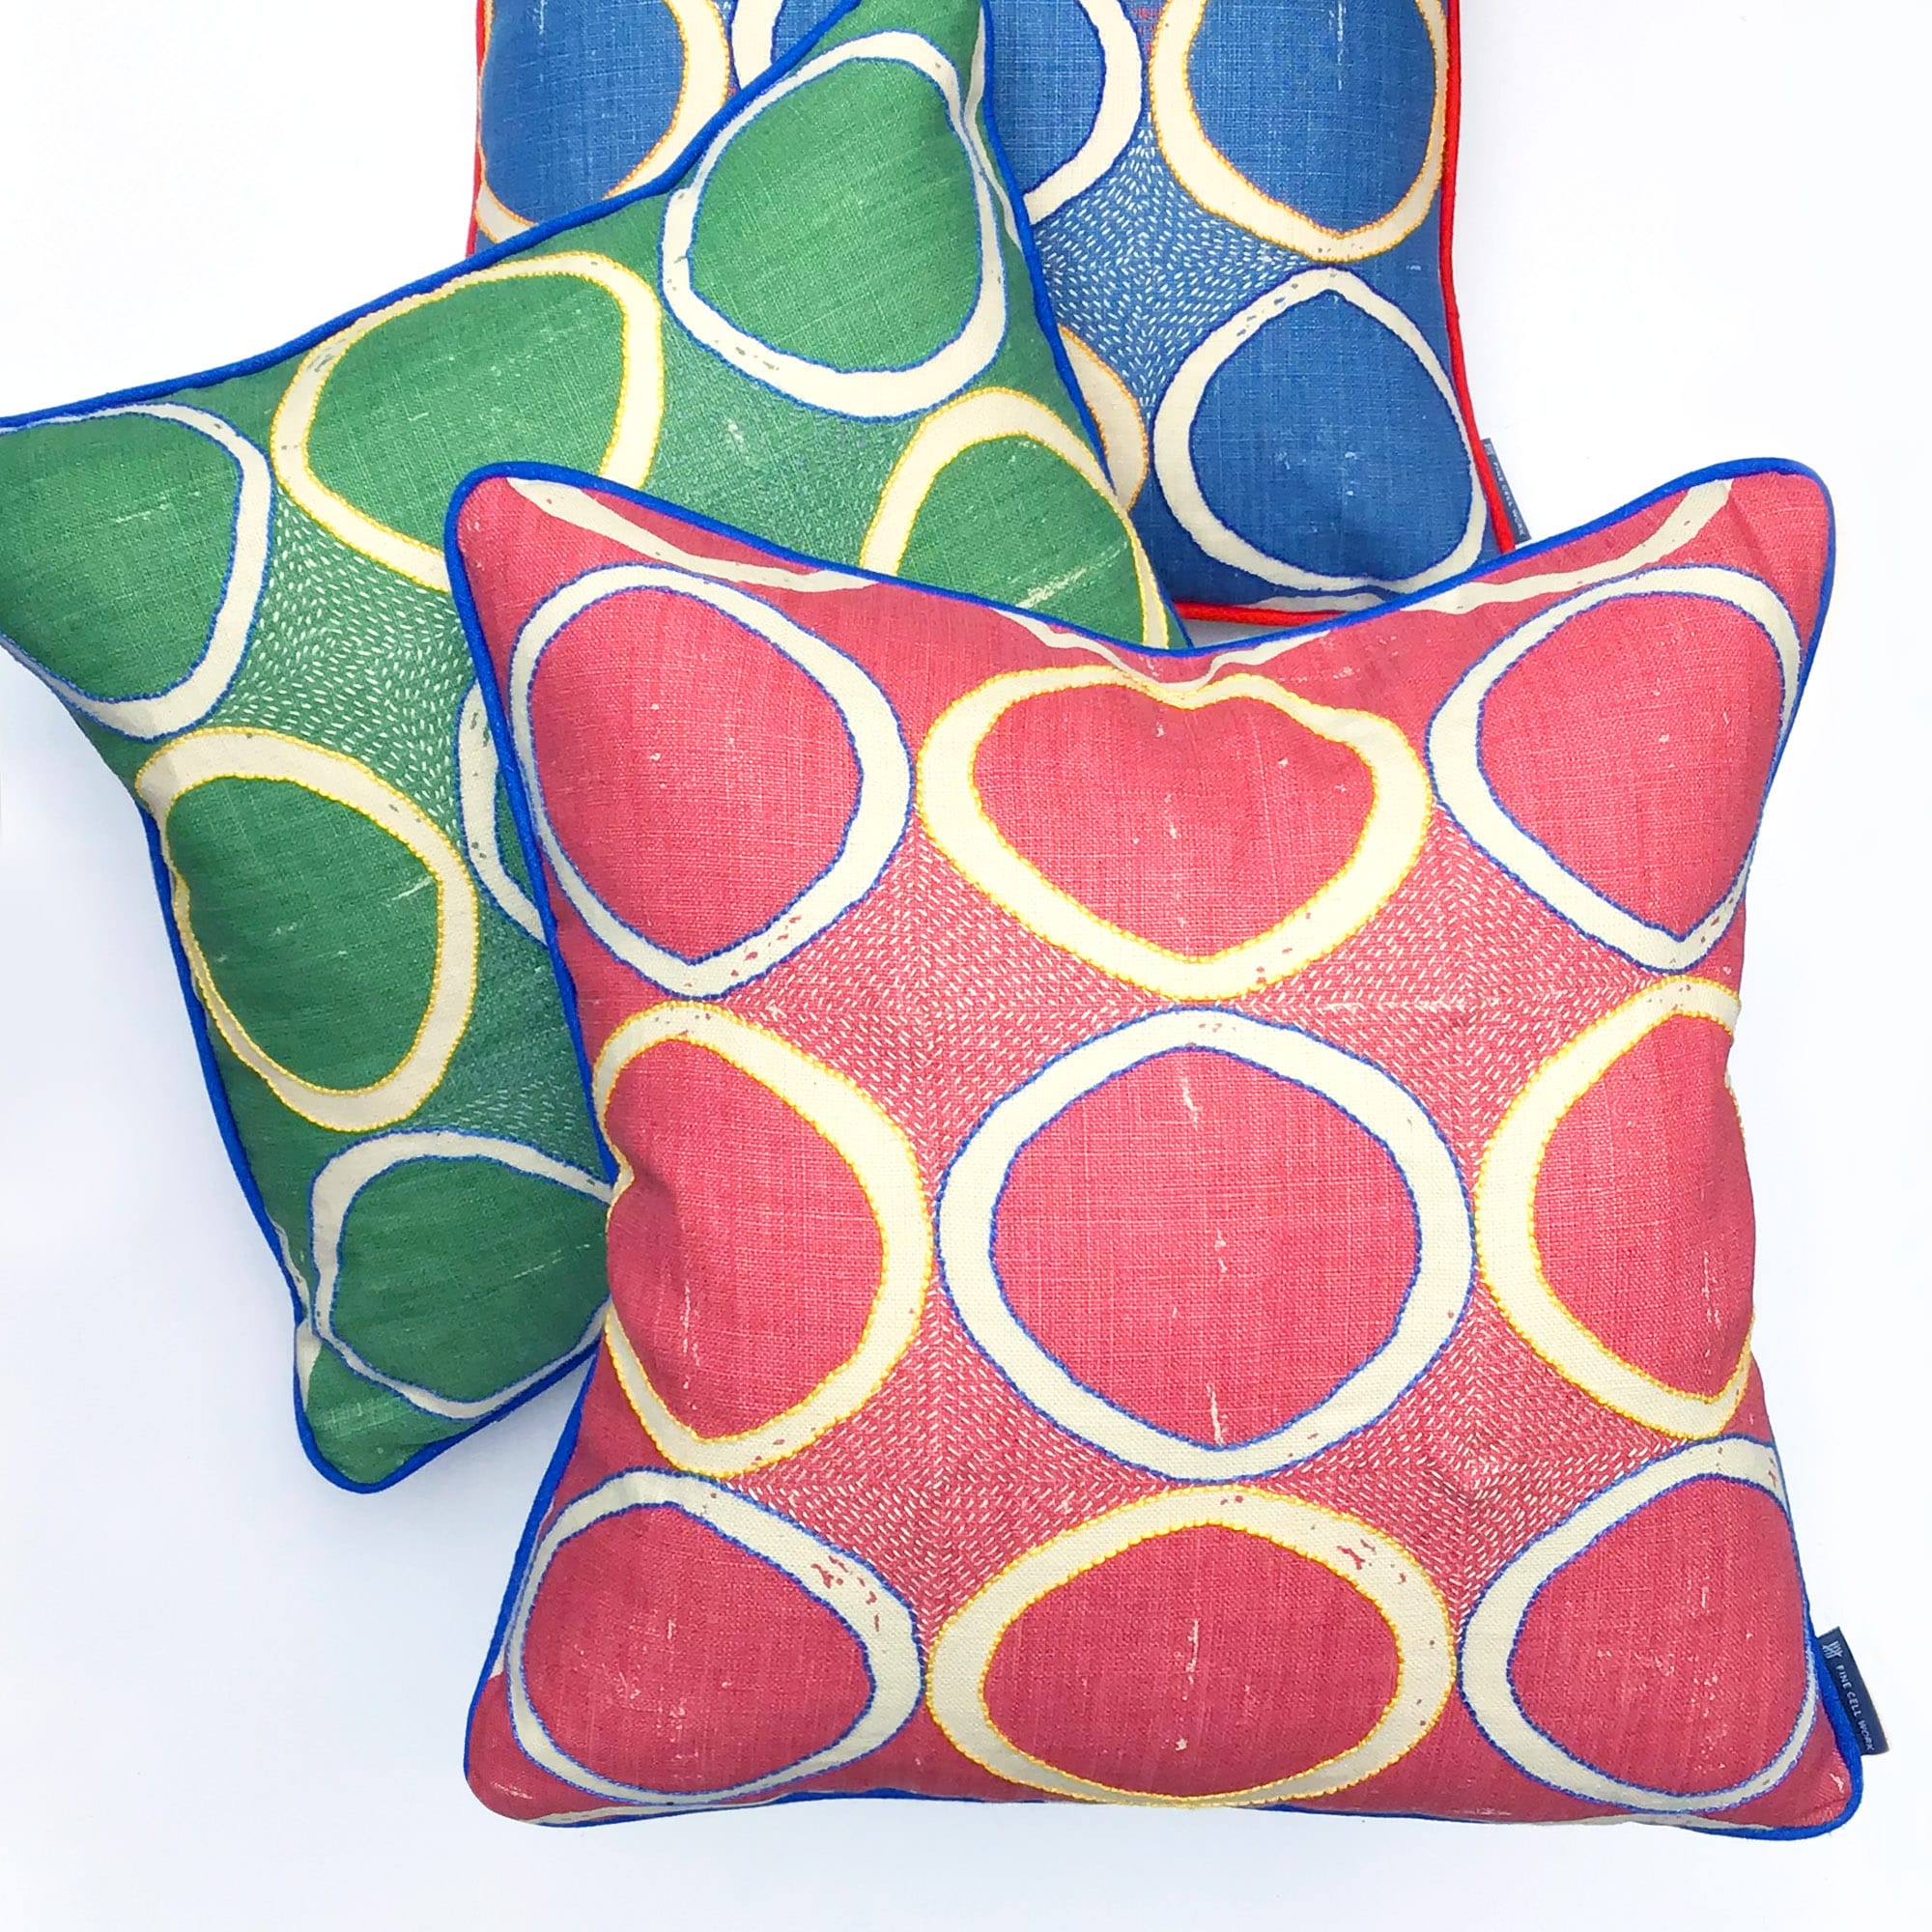 Fine-Cell-Work-Berry-Red-Leaf-Green-Cobalt-Blue-Circles-Blithfield-Kit-Kemp-Hand-Embroidered-New-Linen-Cushions-Collaboration_39148c5d-7e08-4b36-8d9b-1db79c9e6374.jpg